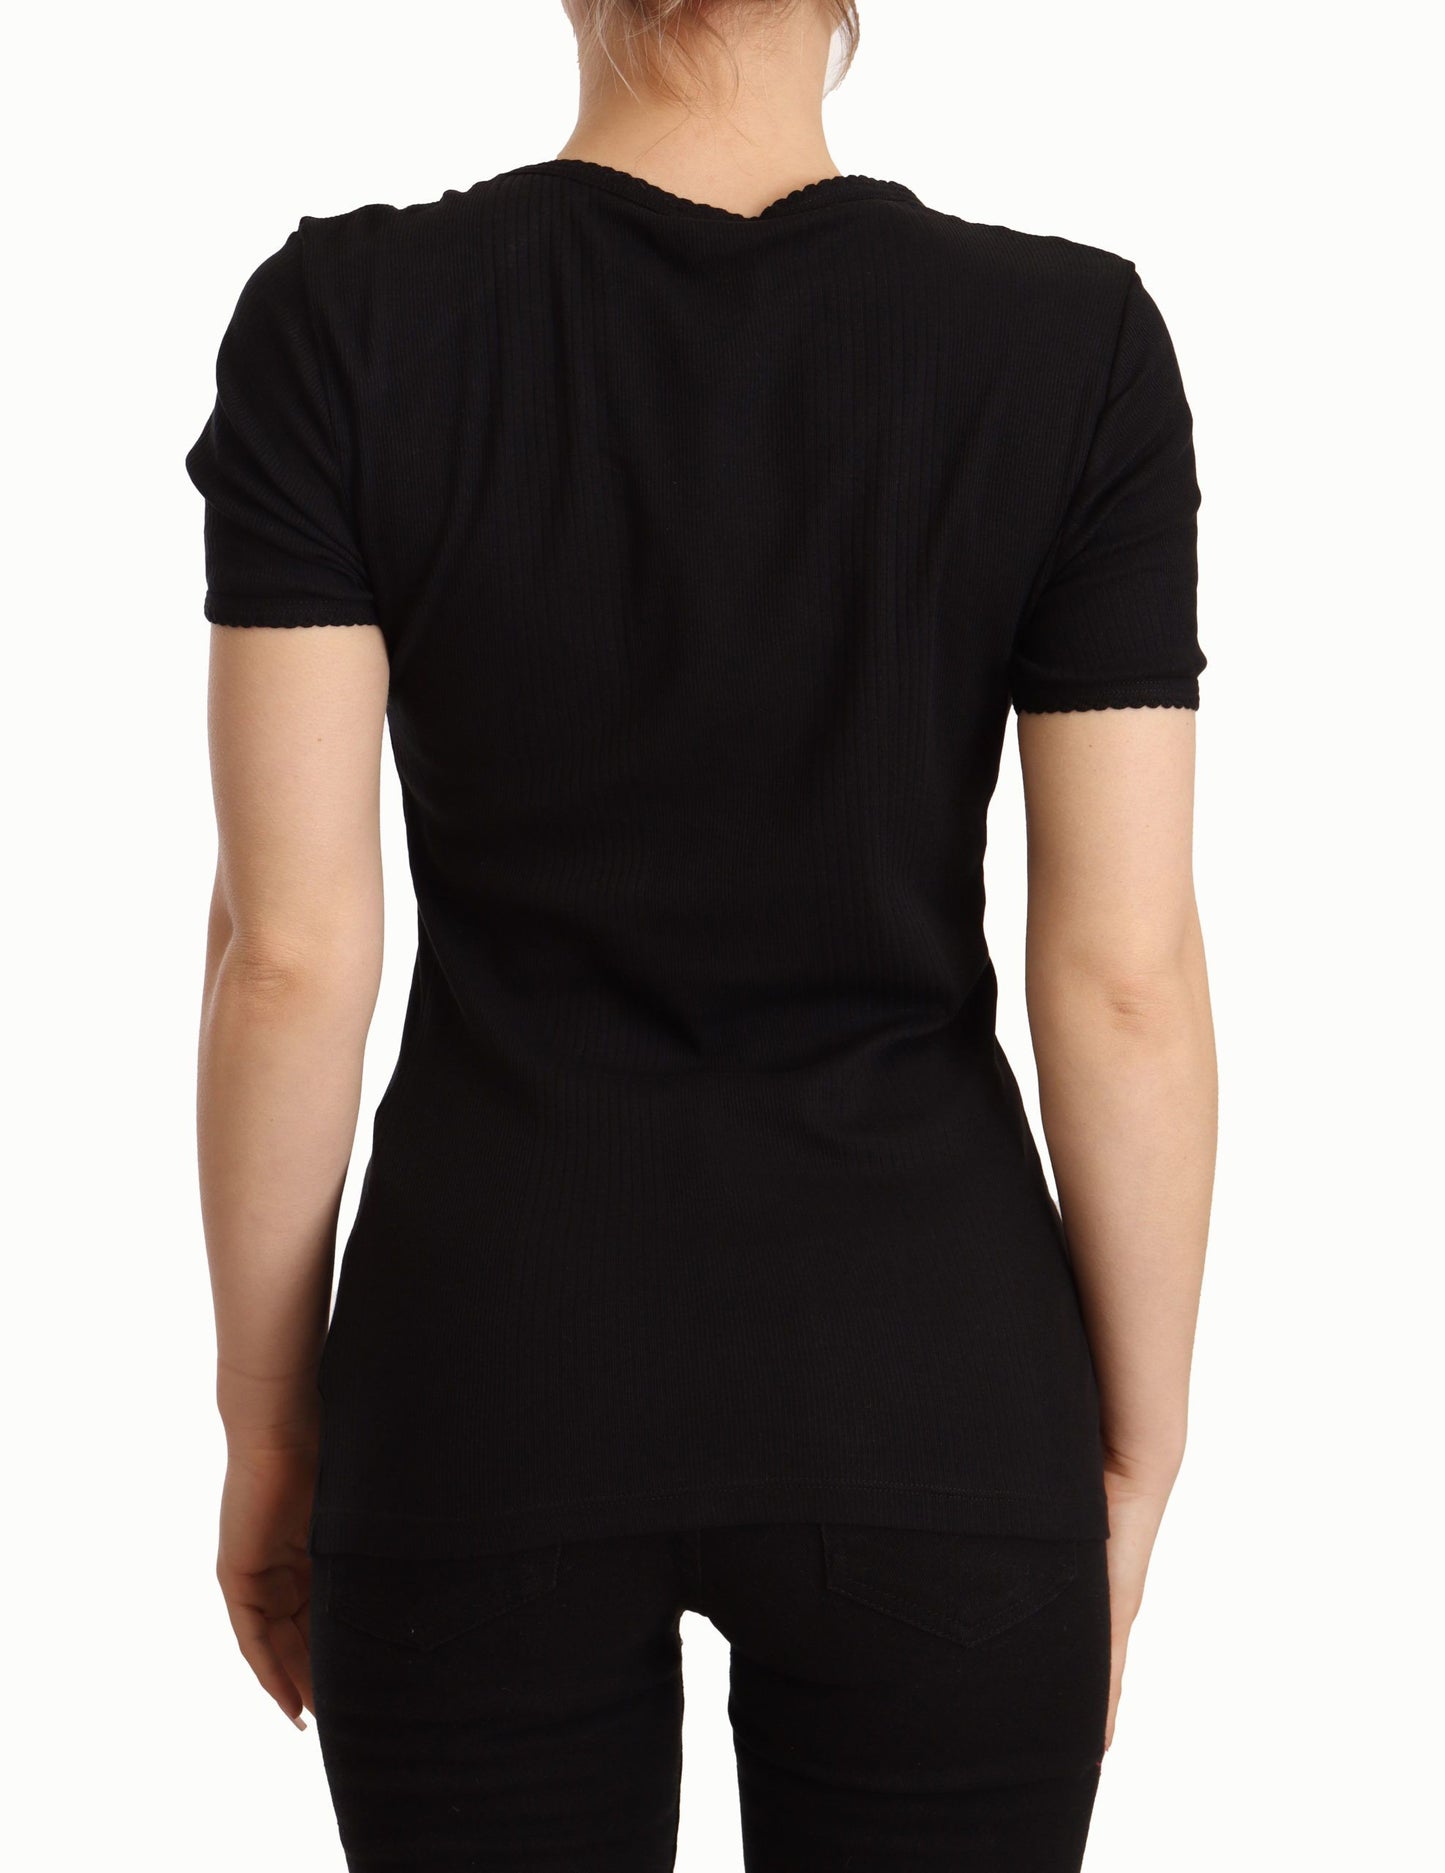 Dolce & Gabbana Elegant Black Cotton Short Sleeve Top